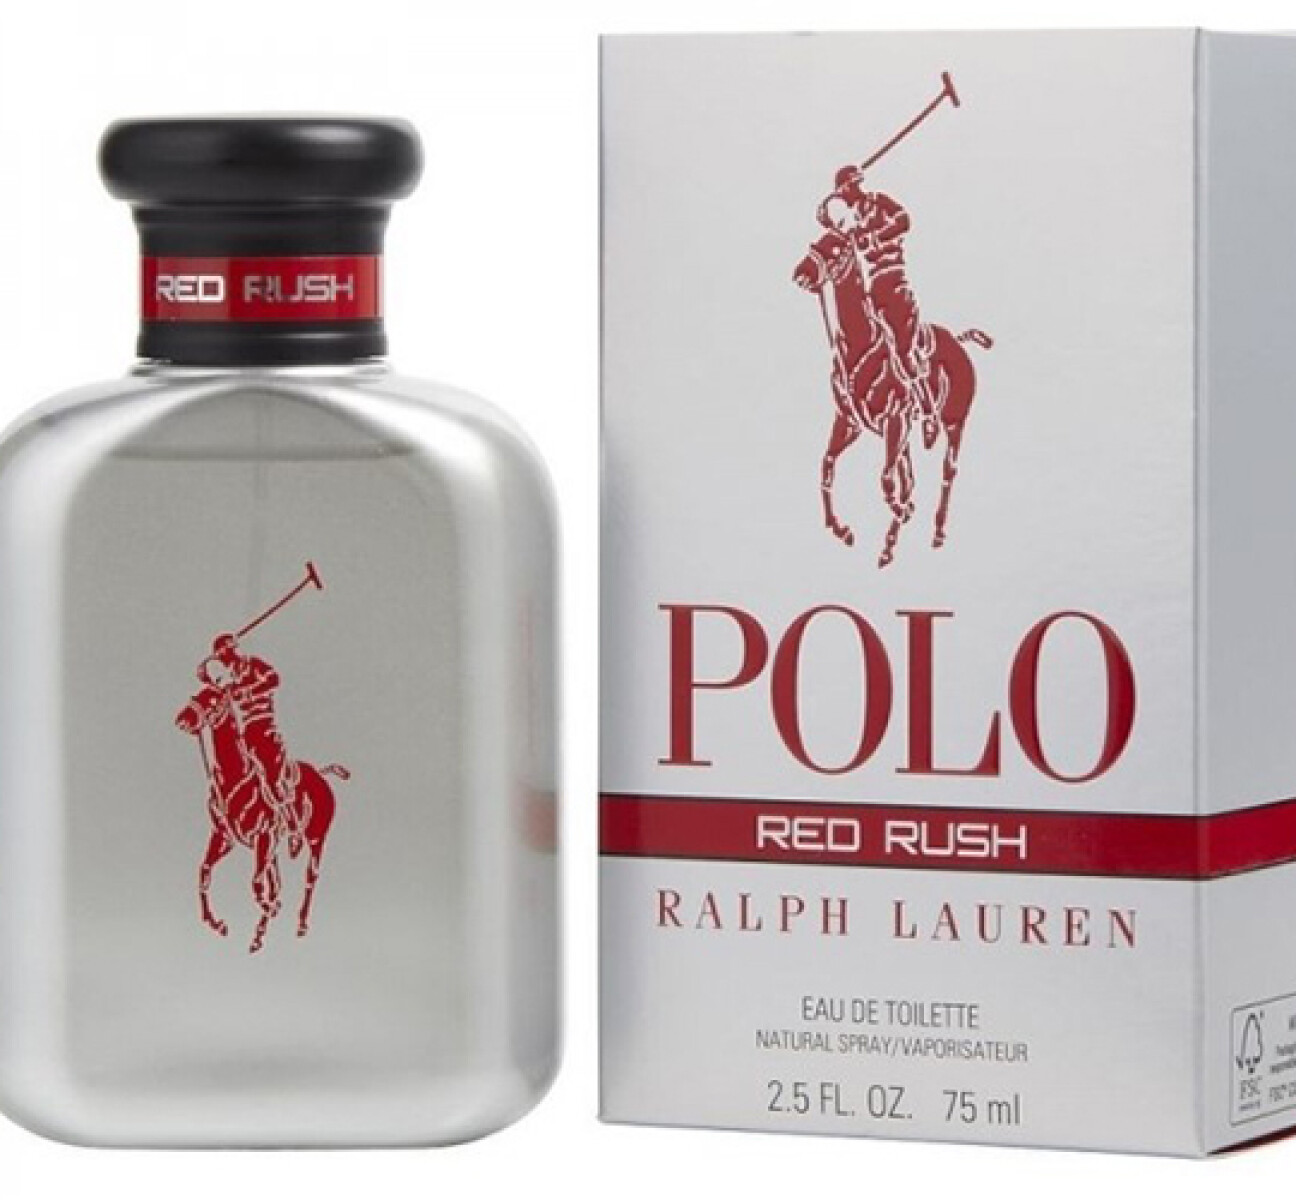 Polo Red Rush edt Ralph Lauren - 75 ml 